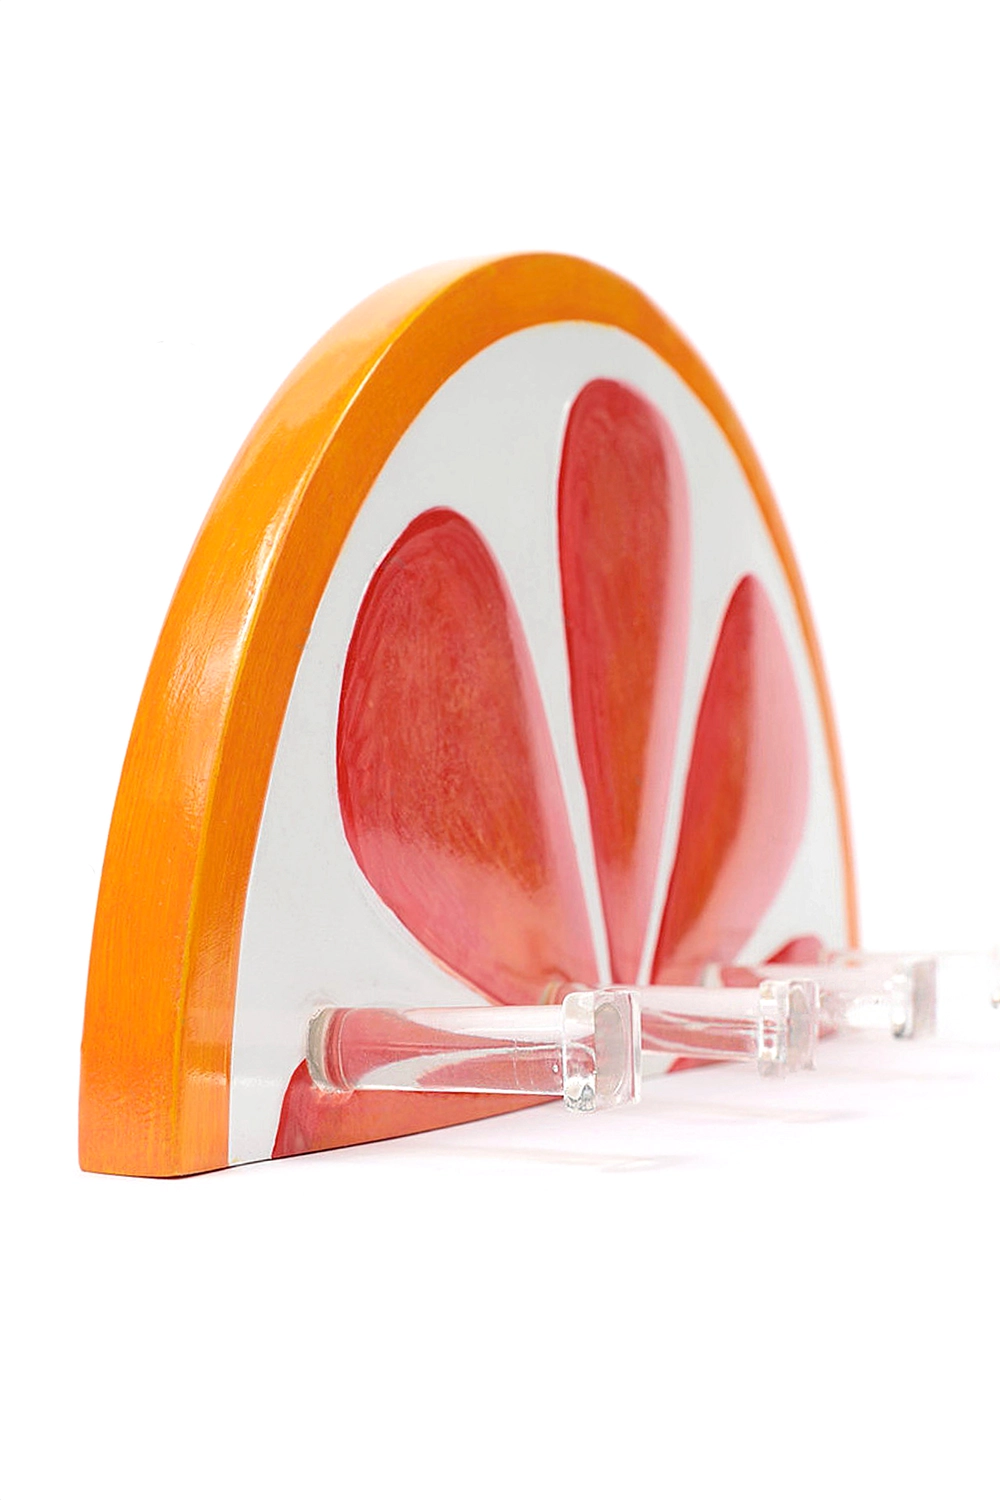 Llavero de rodaja de naranja sanguina hecho a mano